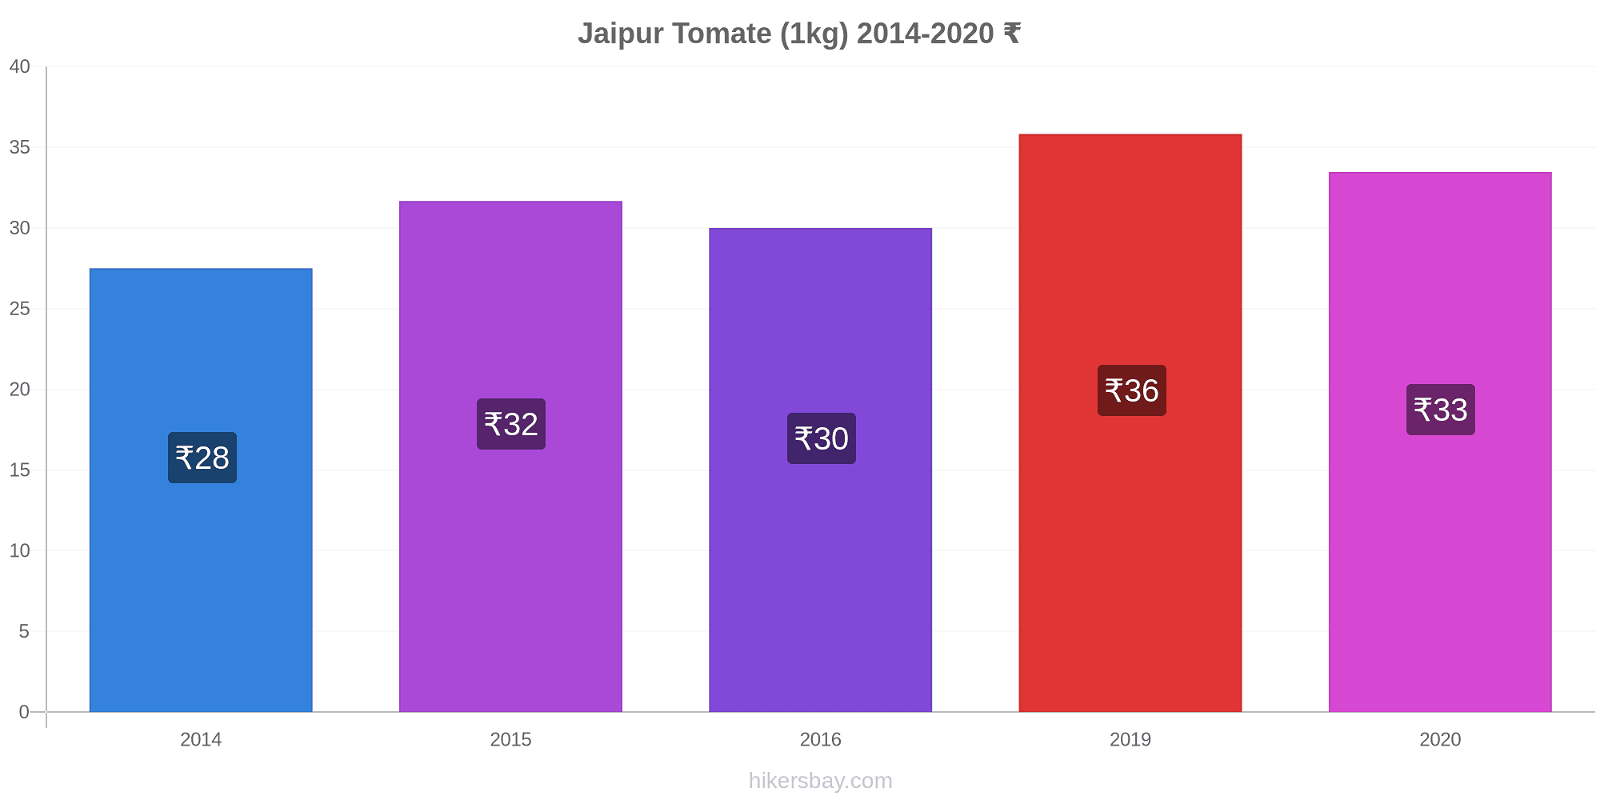 Jaipur cambios de precios Tomate (1kg) hikersbay.com